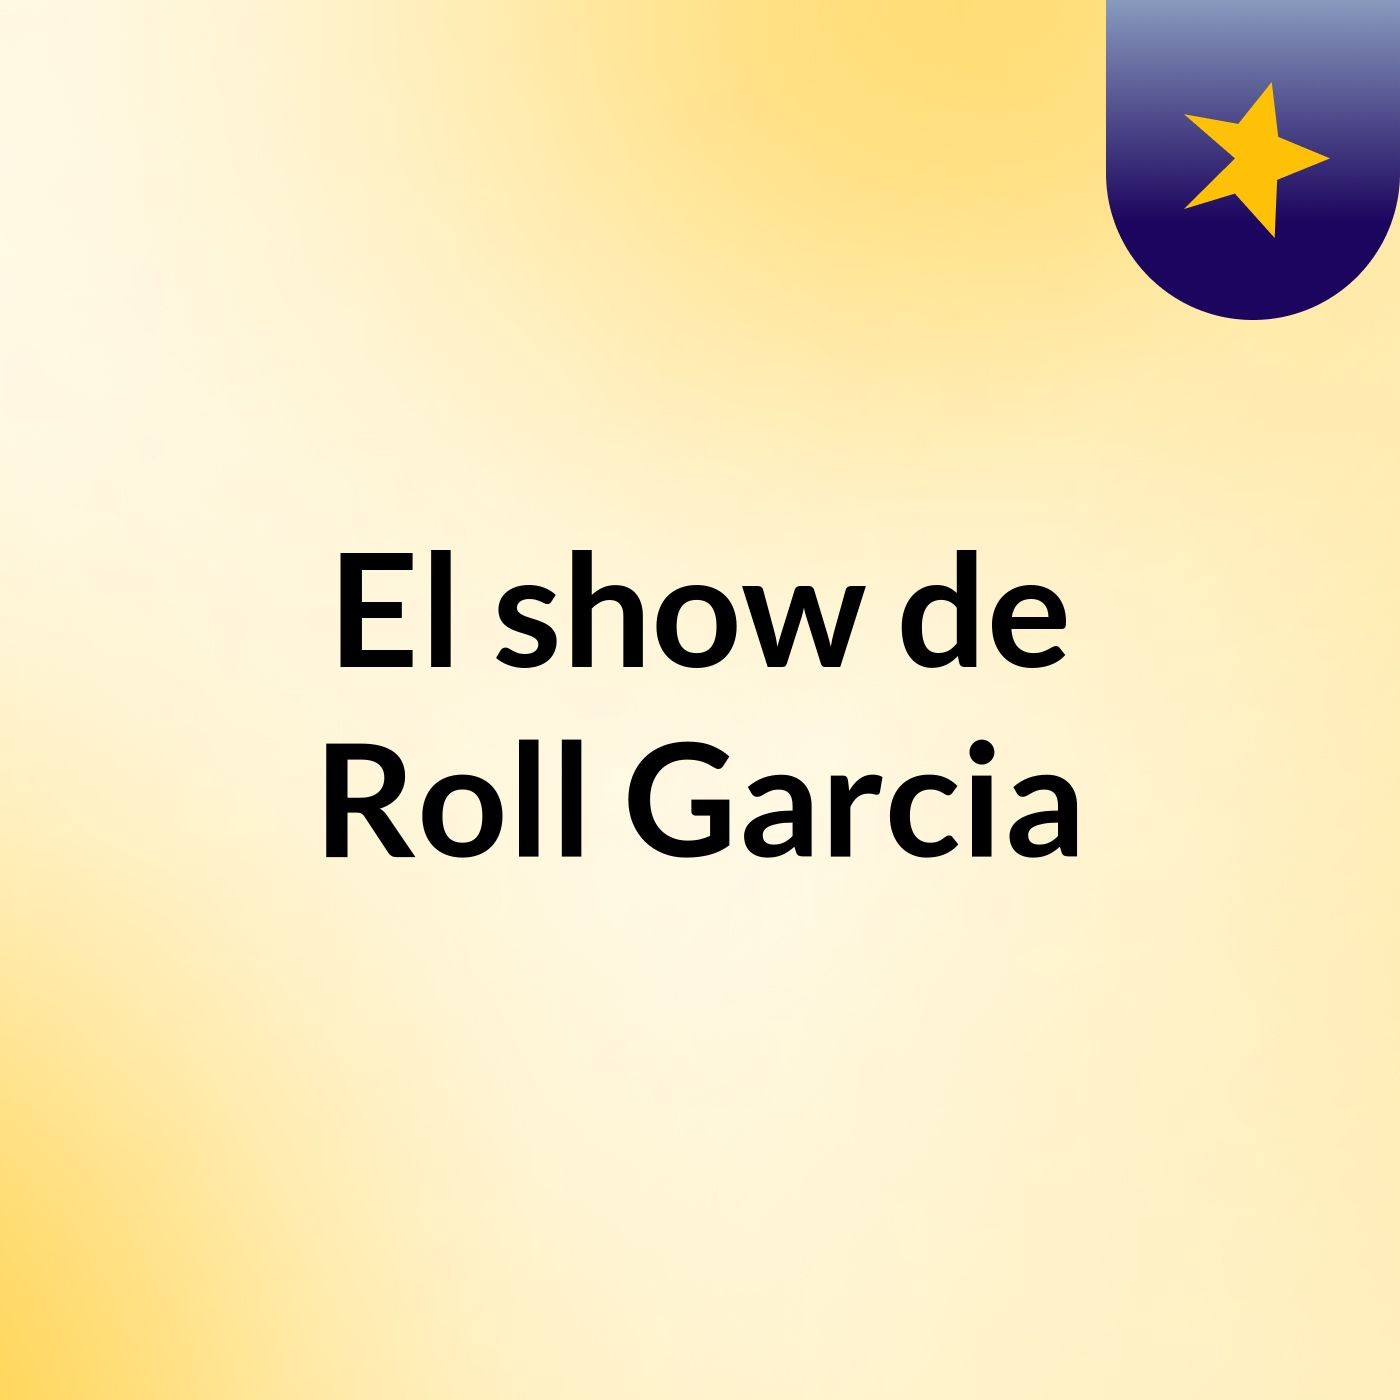 El show de Roll Garcia